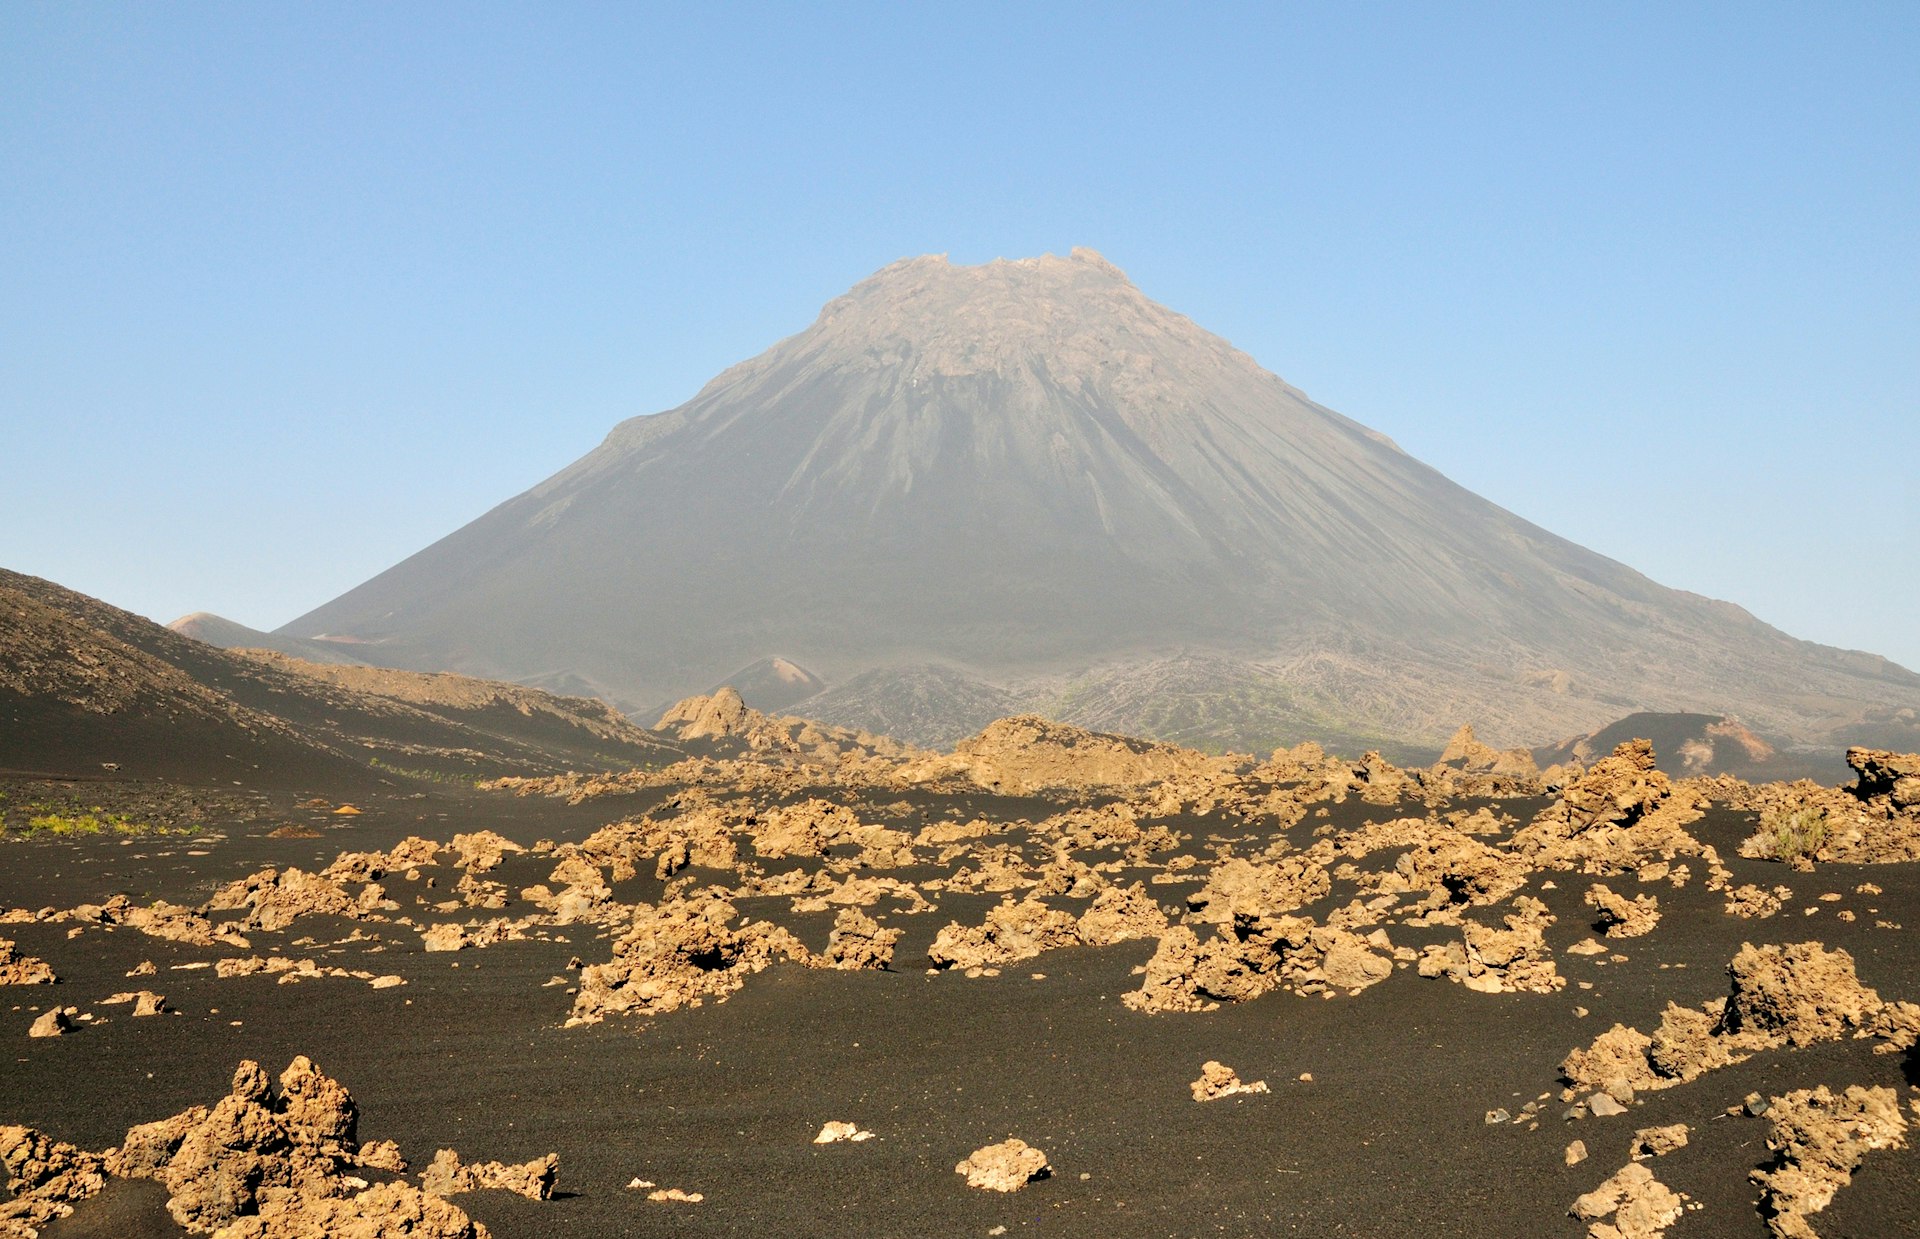 The lunar-like volcanic landscape found on the island of Fogo, Cabo Verde part of "Pico do Fogo" Volcano National Park